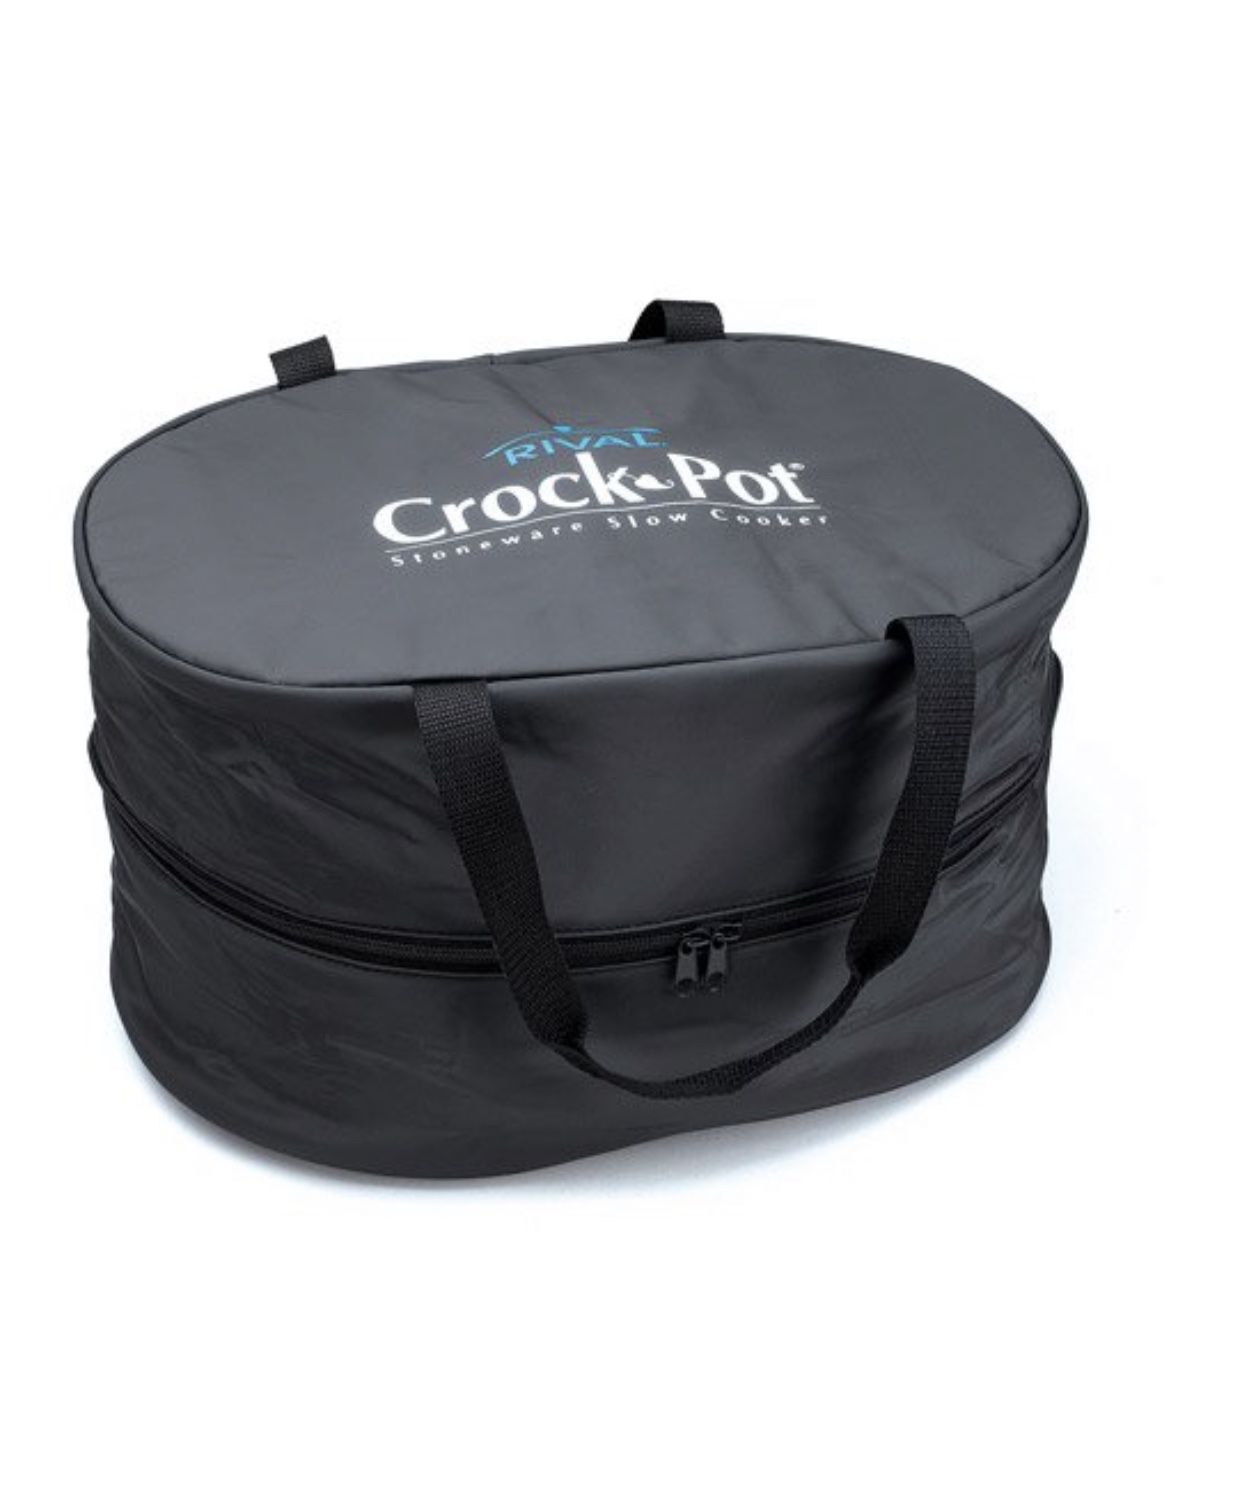 Insulated Crock-Pot Slow Cooker Travel Bag 15.80 x 11.00 x 9.00